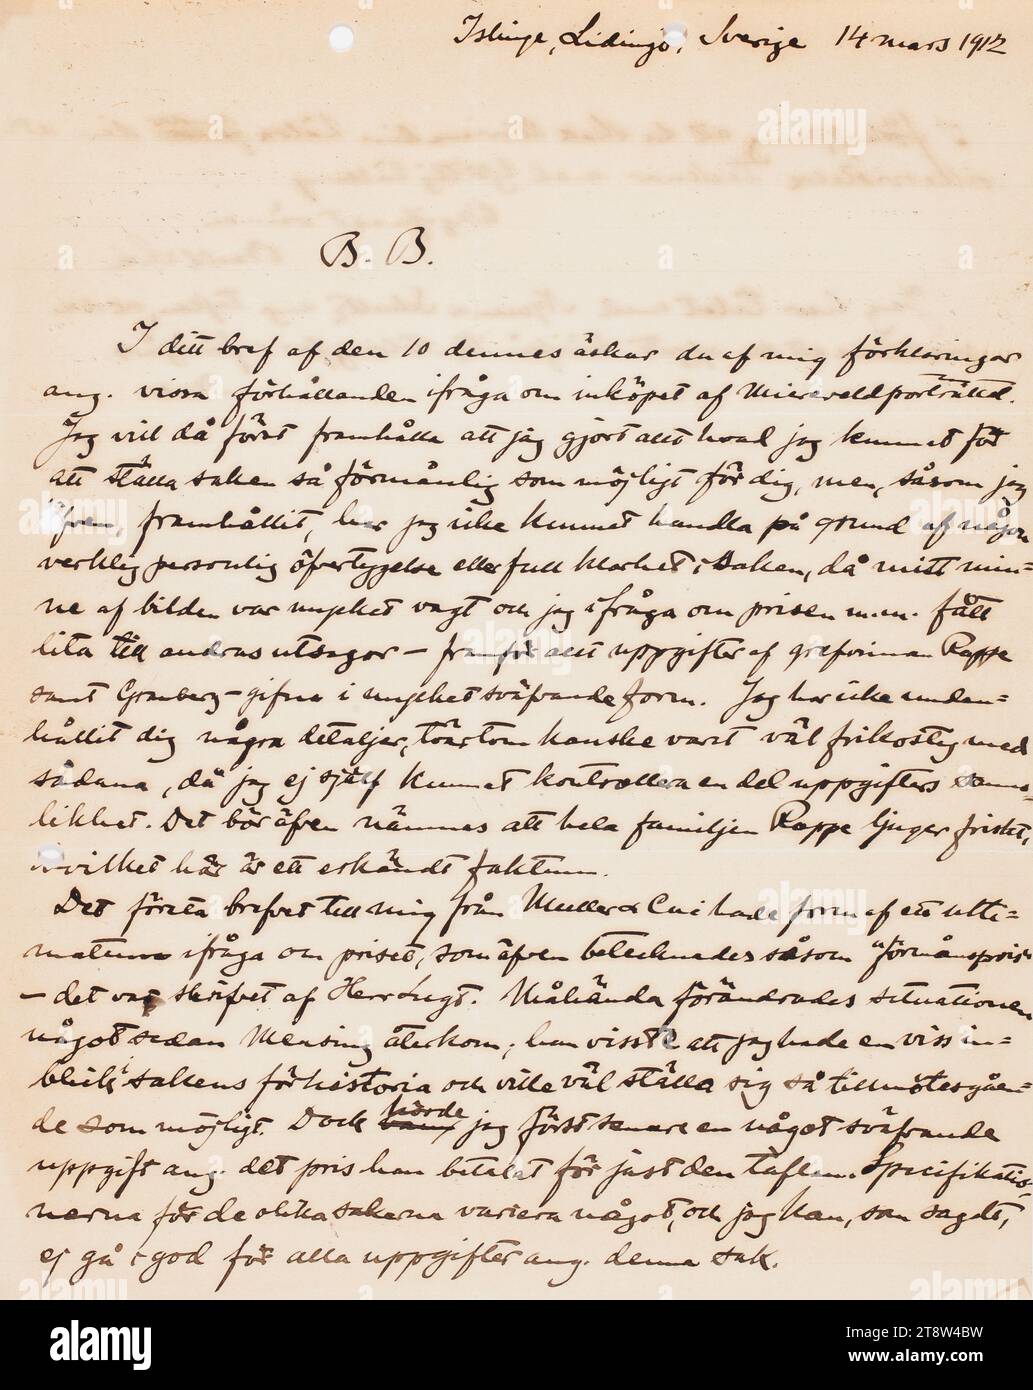 Korrespondenz, Brief von Osvald Sirén an Paul Sinebrychoff 14.3,1912, Islinge, Lidingö Stockfoto